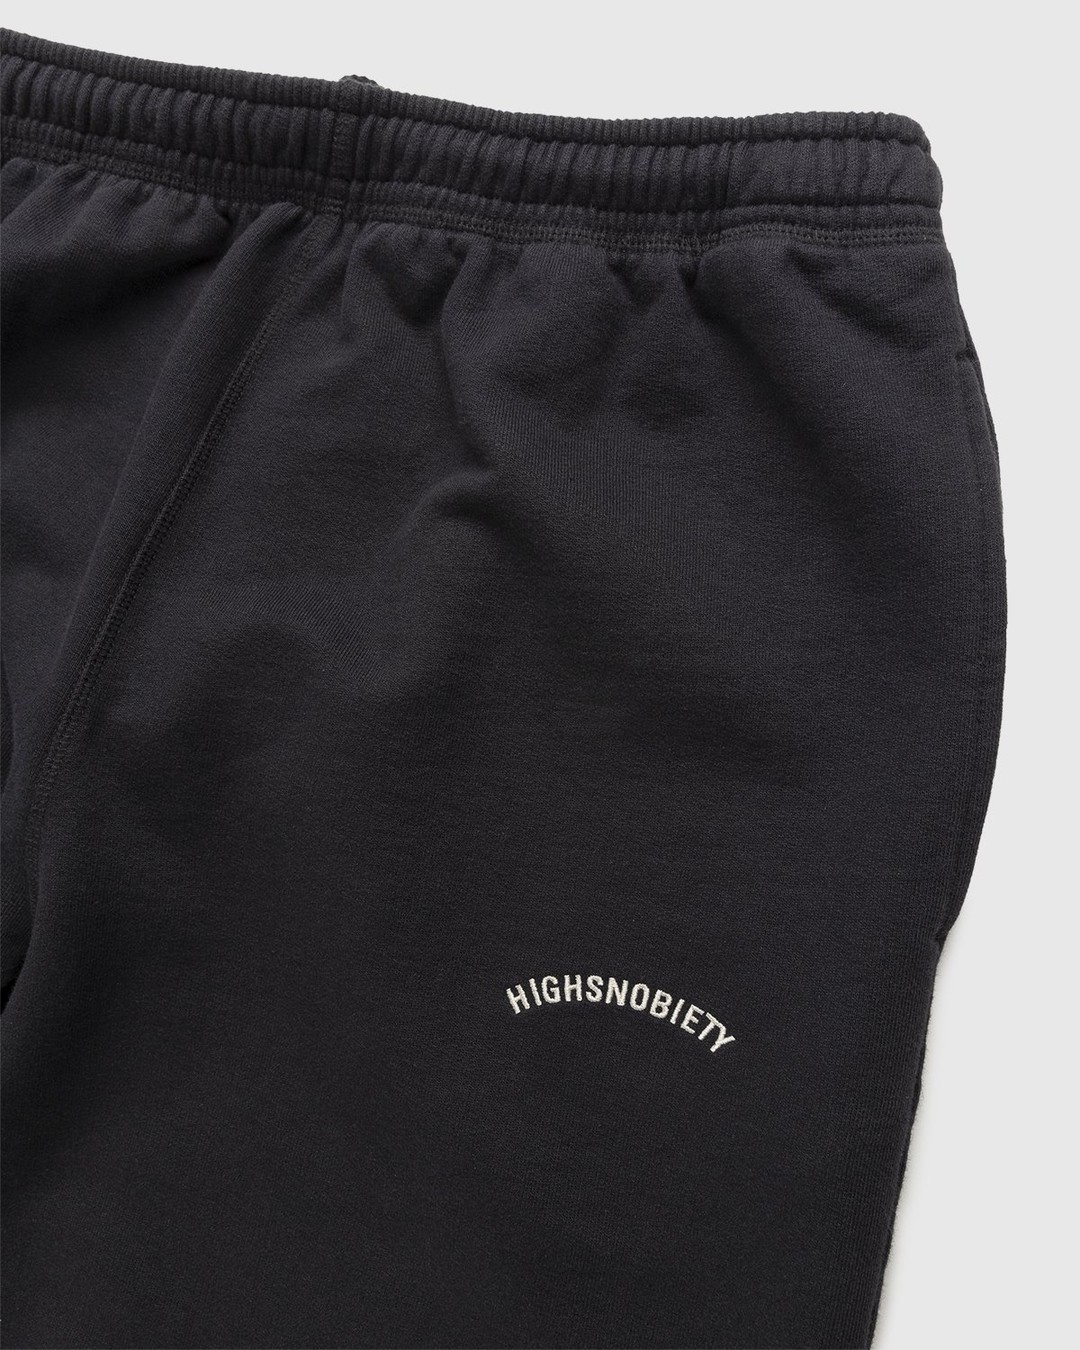 Highsnobiety – Logo Fleece Staples Pants Black - Sweatpants - Black - Image 4